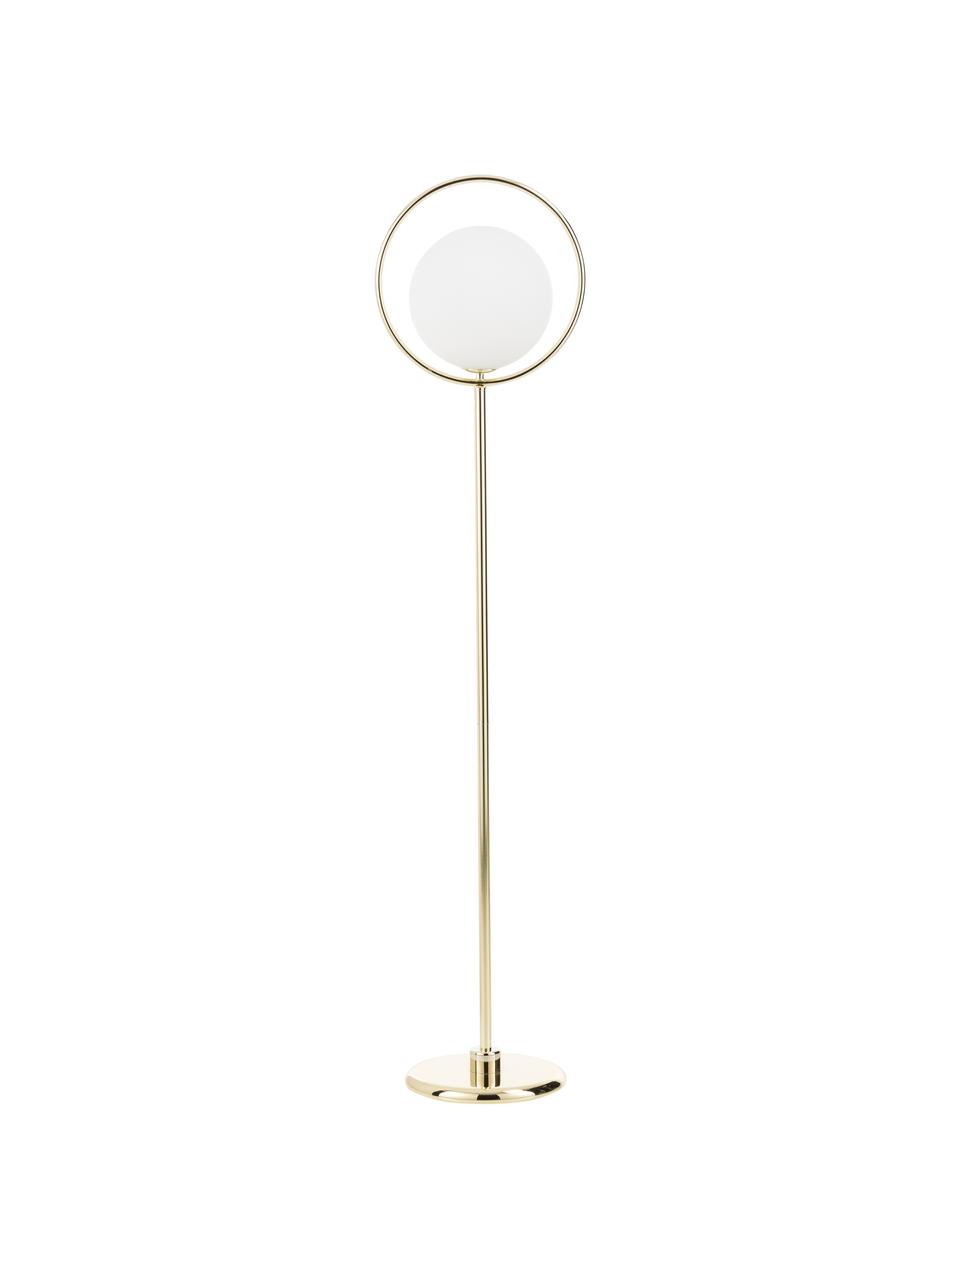 Design-Stehlampe Saint in Gold, Lampenschirm: Glas, Weiss, Messing, 30 x 140 cm